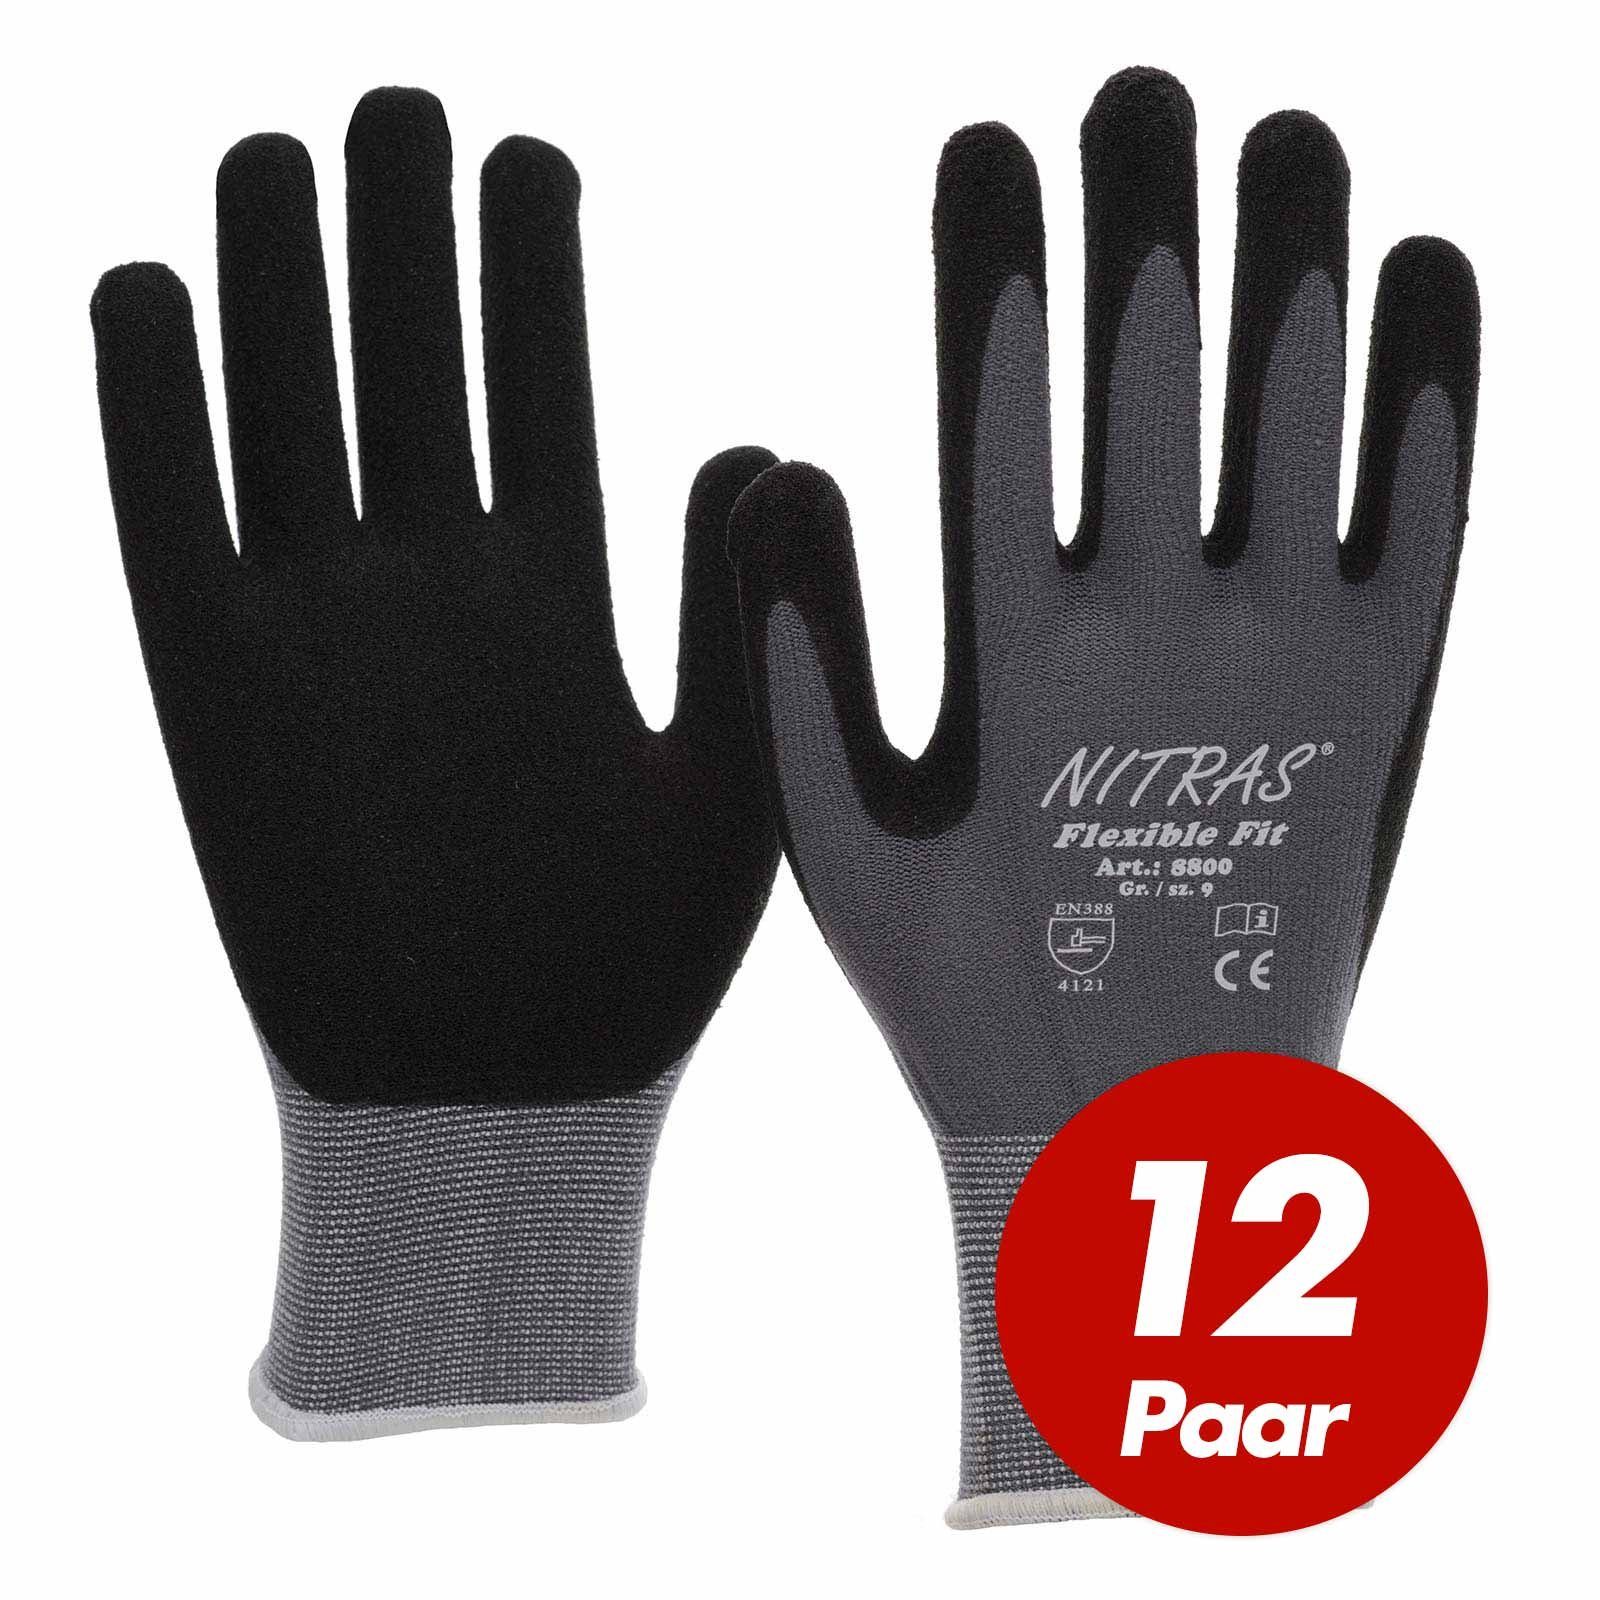 Nitras Nitril-Handschuhe NITRAS 8800 Flexible Fit Allroundhandschuhe, Handschuhe - VPE 12 Paar (Spar-Set)